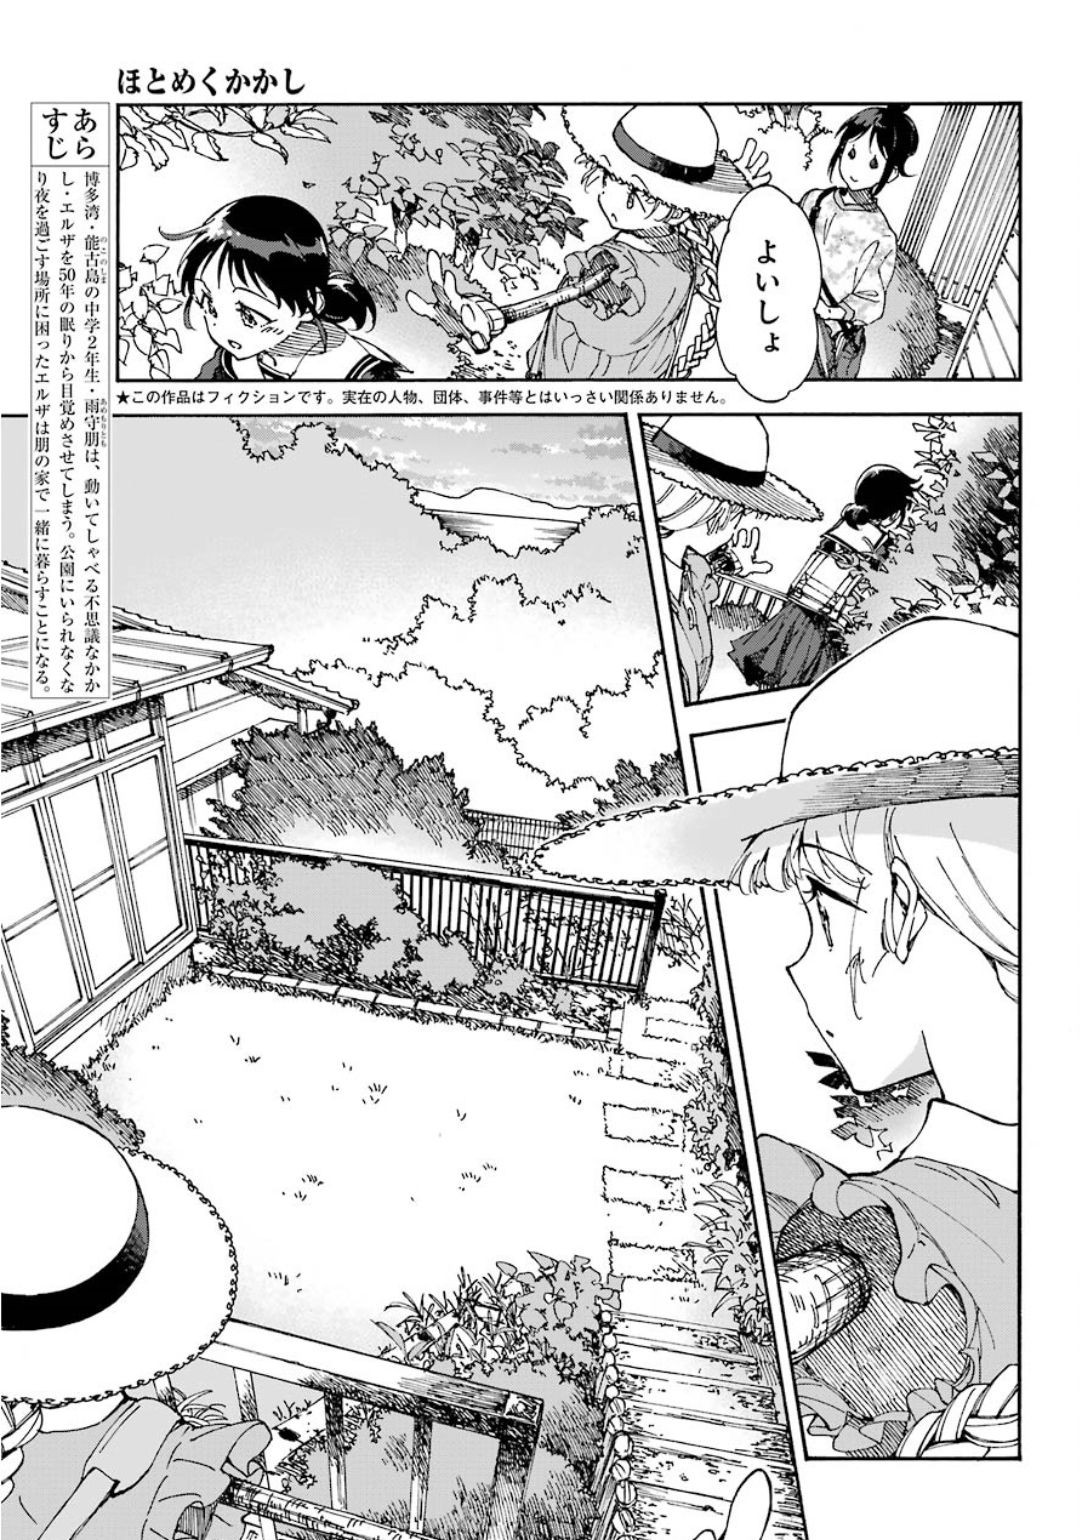 Hotomeku-kakashi - Chapter 04-1 - Page 3